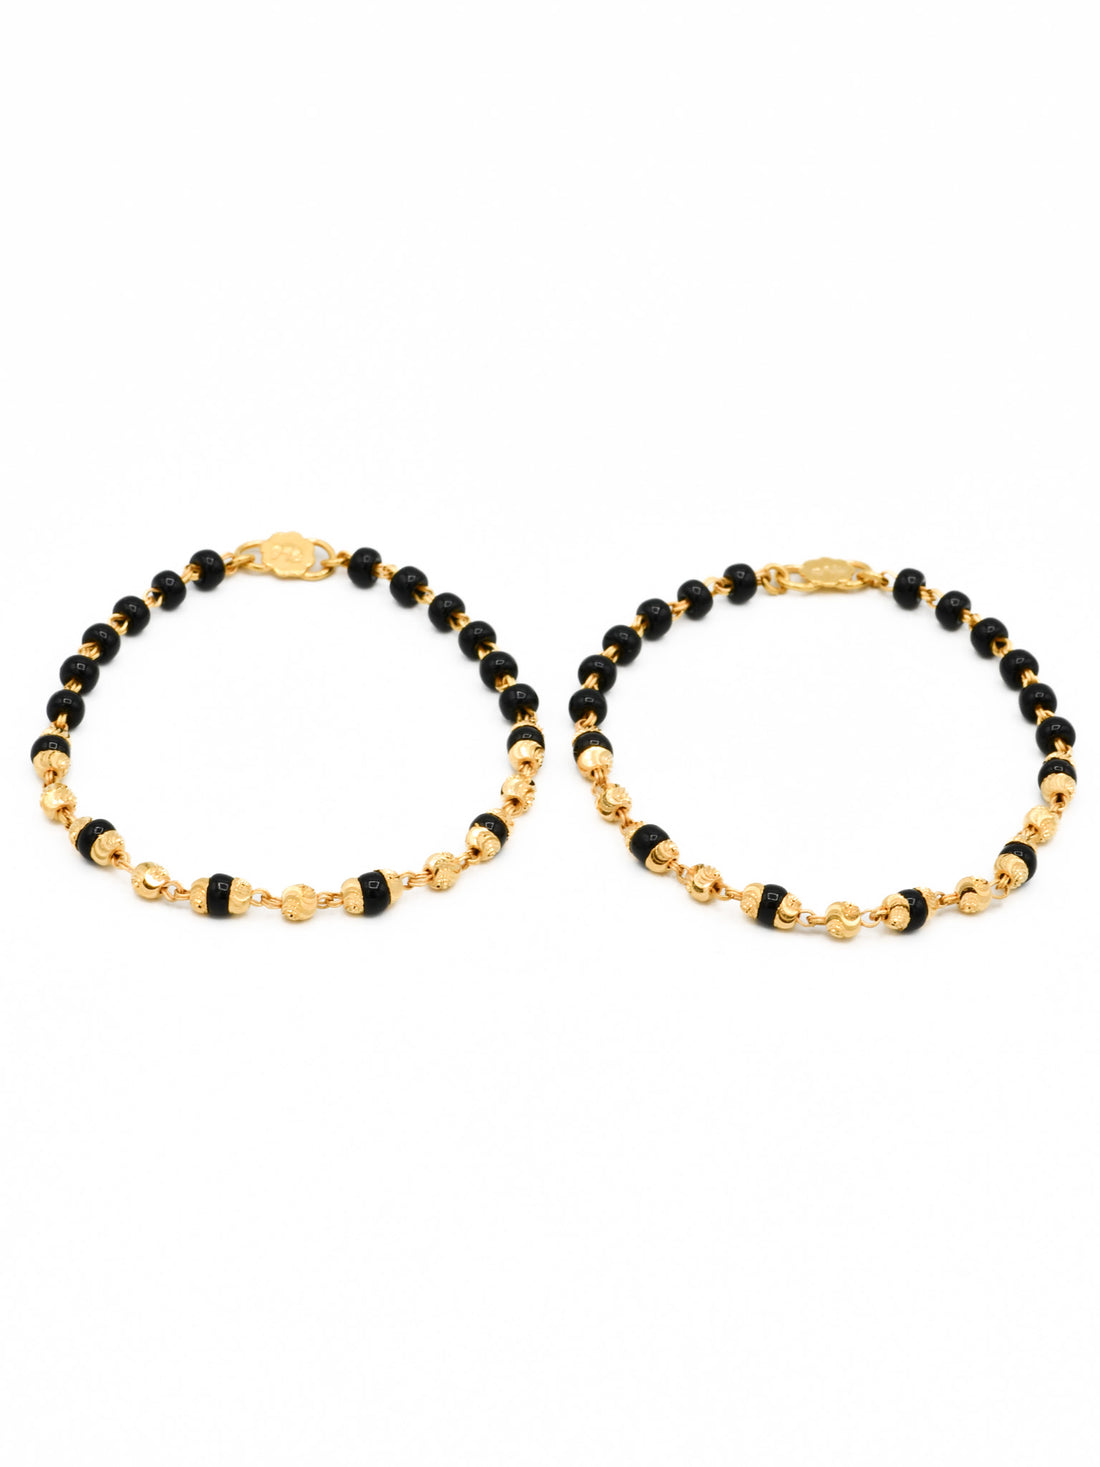 22ct Gold Ball Black Beads Pair Baby Bracelet - Roop Darshan